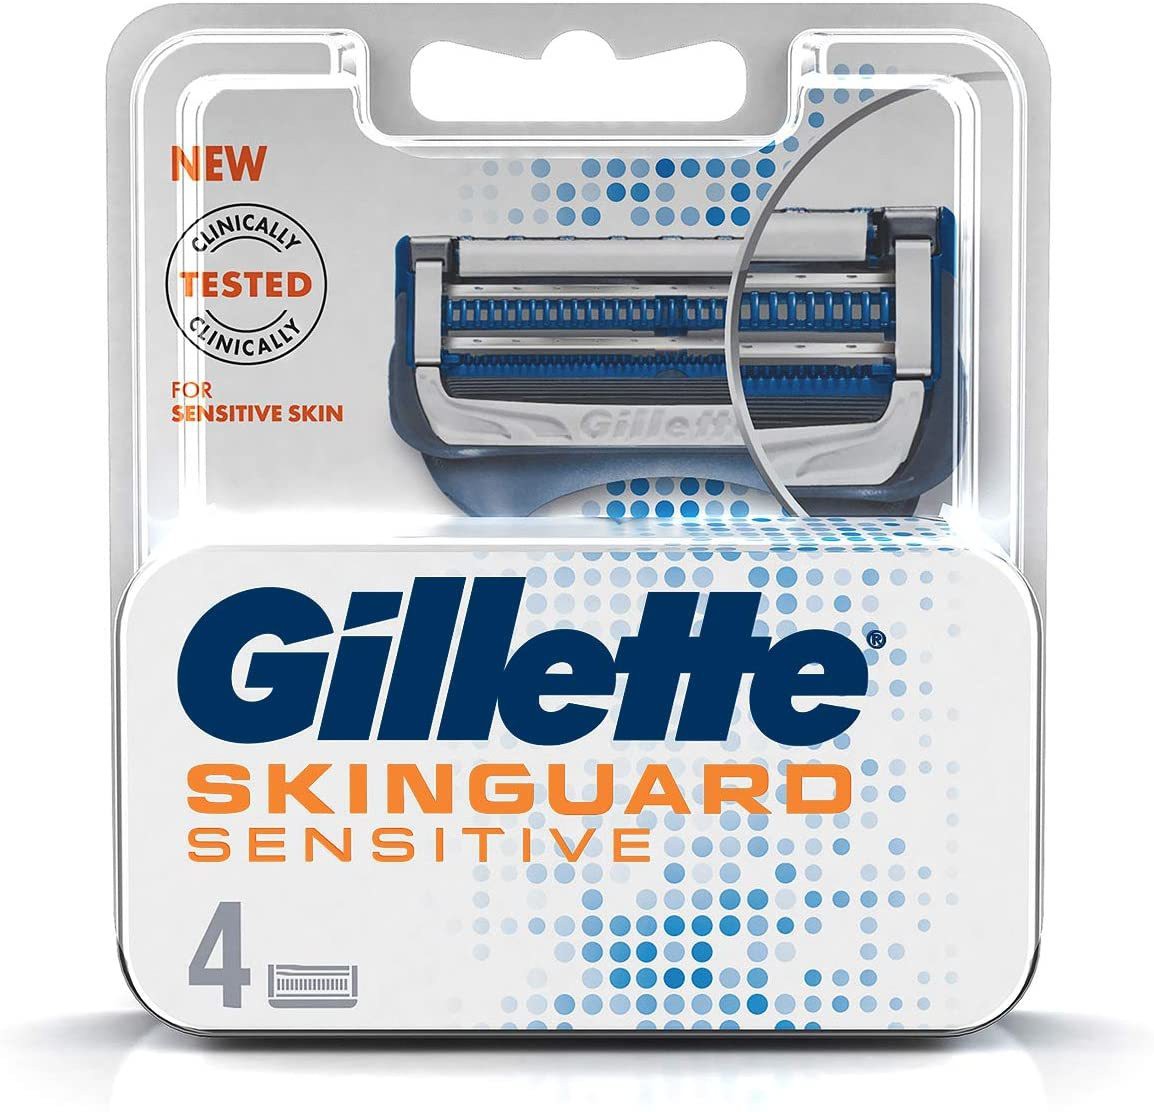 Gillette Skinguard Minimum Contact Shaving Cartridges with Precision Blade